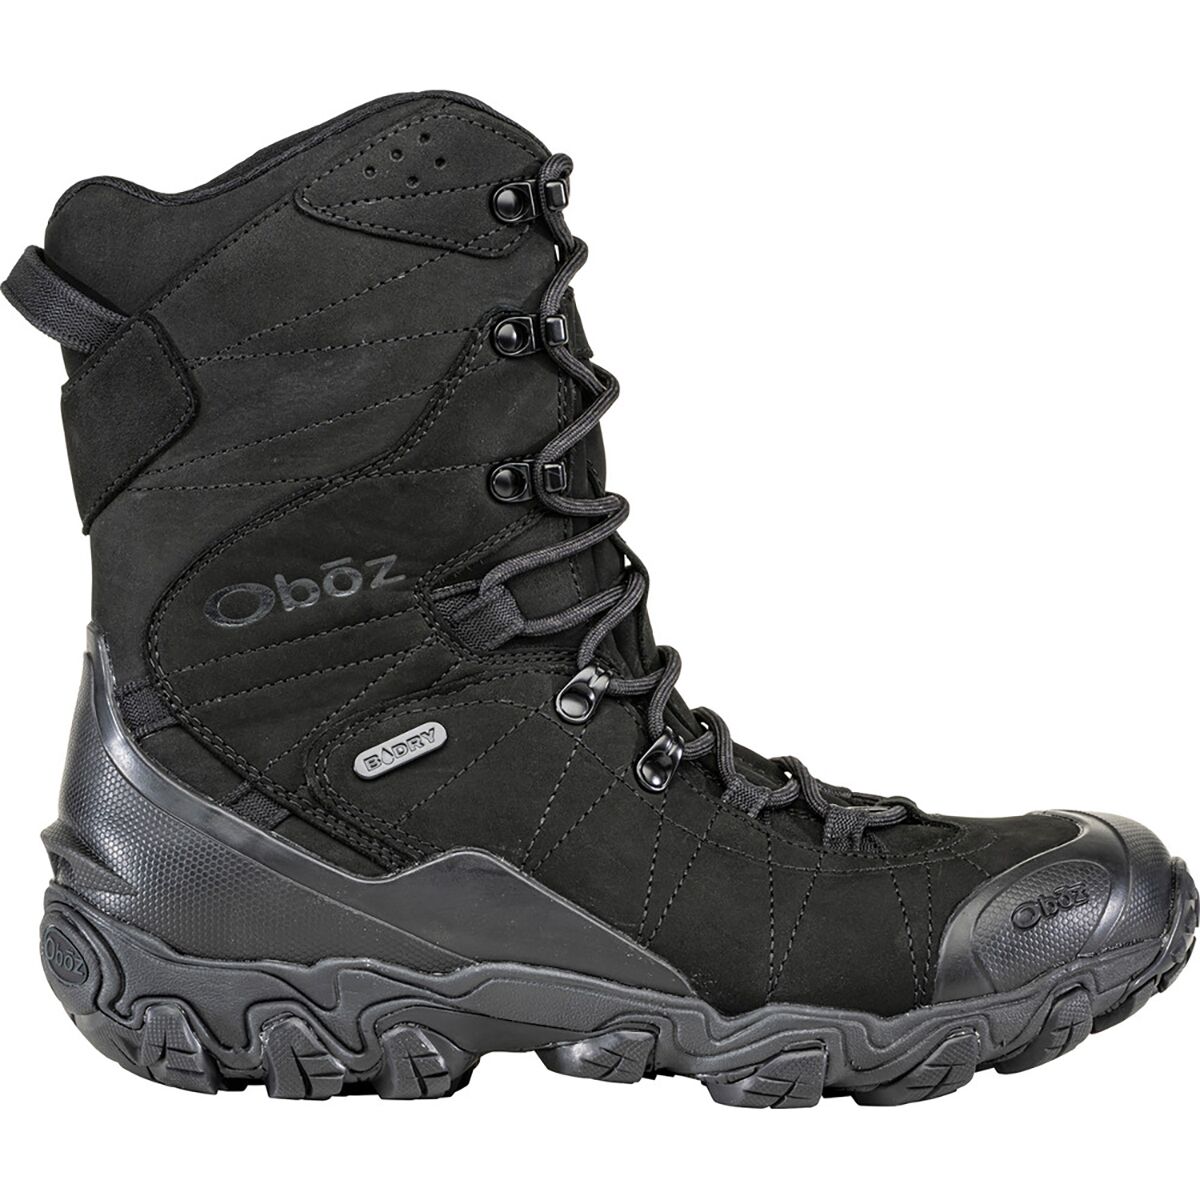 Oboz Bridger 10in Insulated B-Dry Boot - Men's